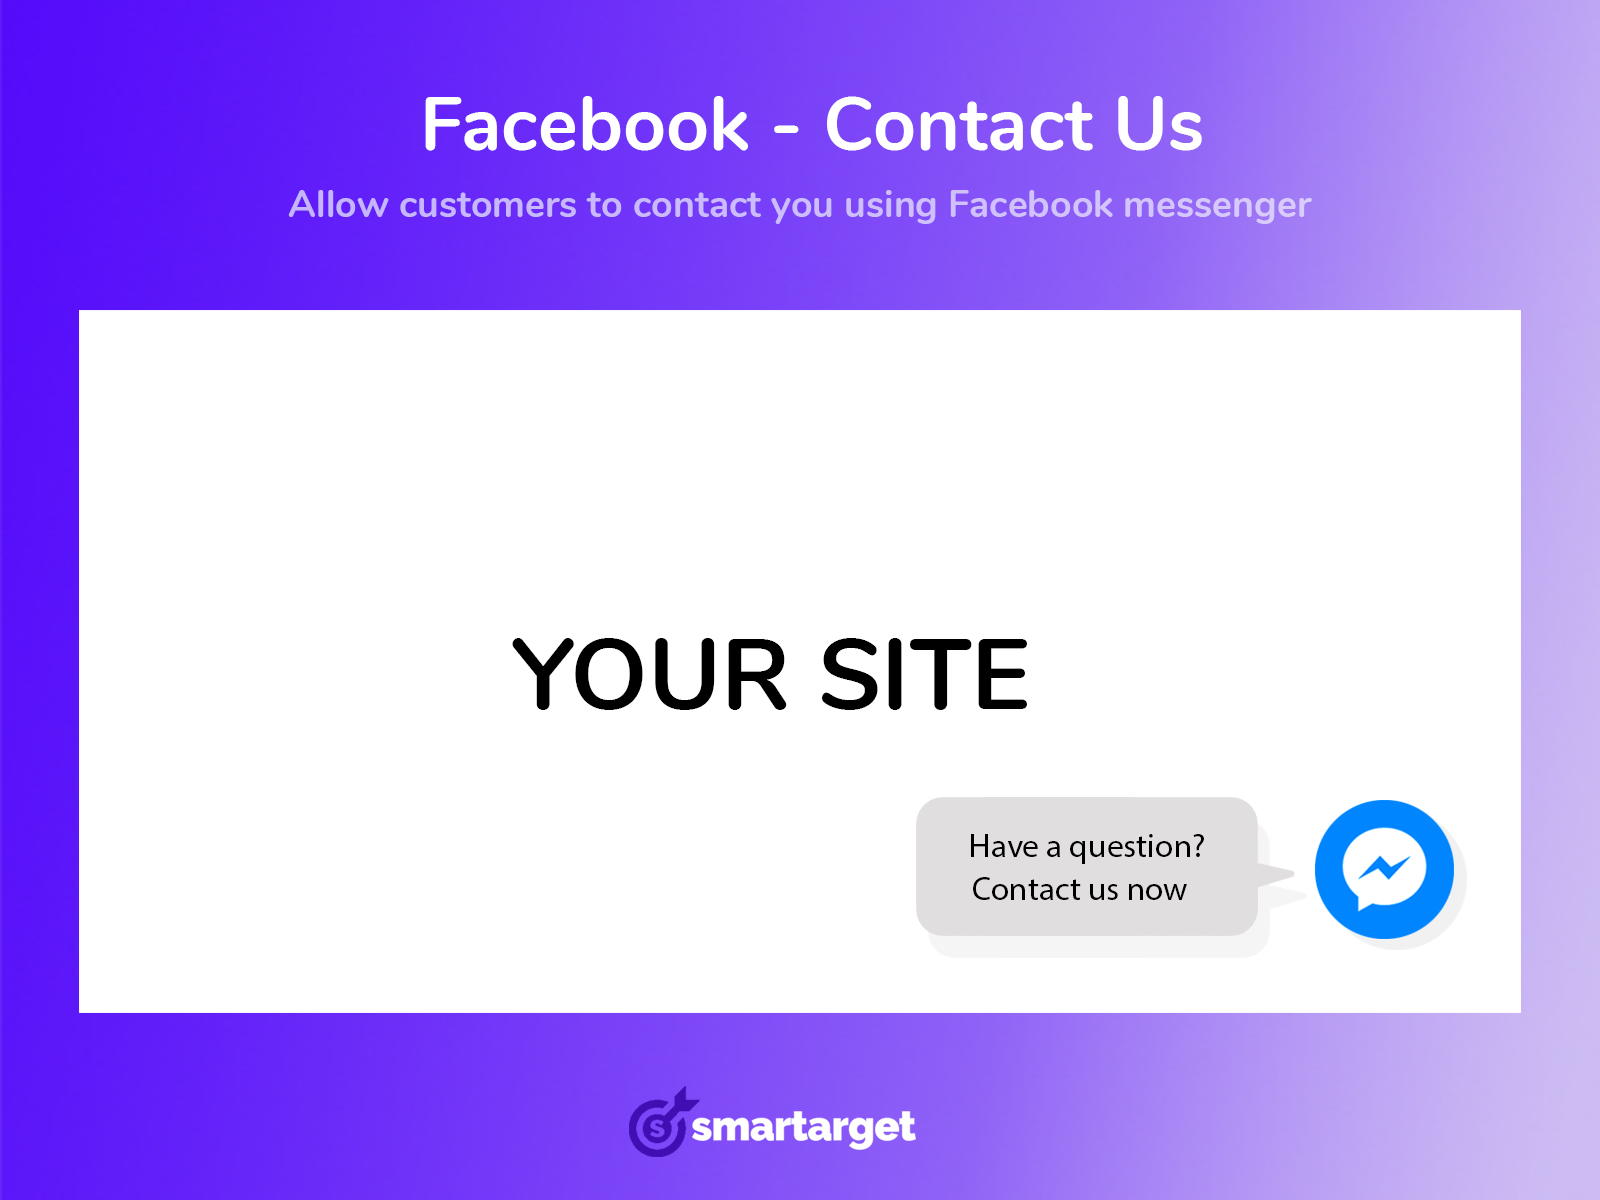 Smartarget Facebook Messenger - Contact Us Image